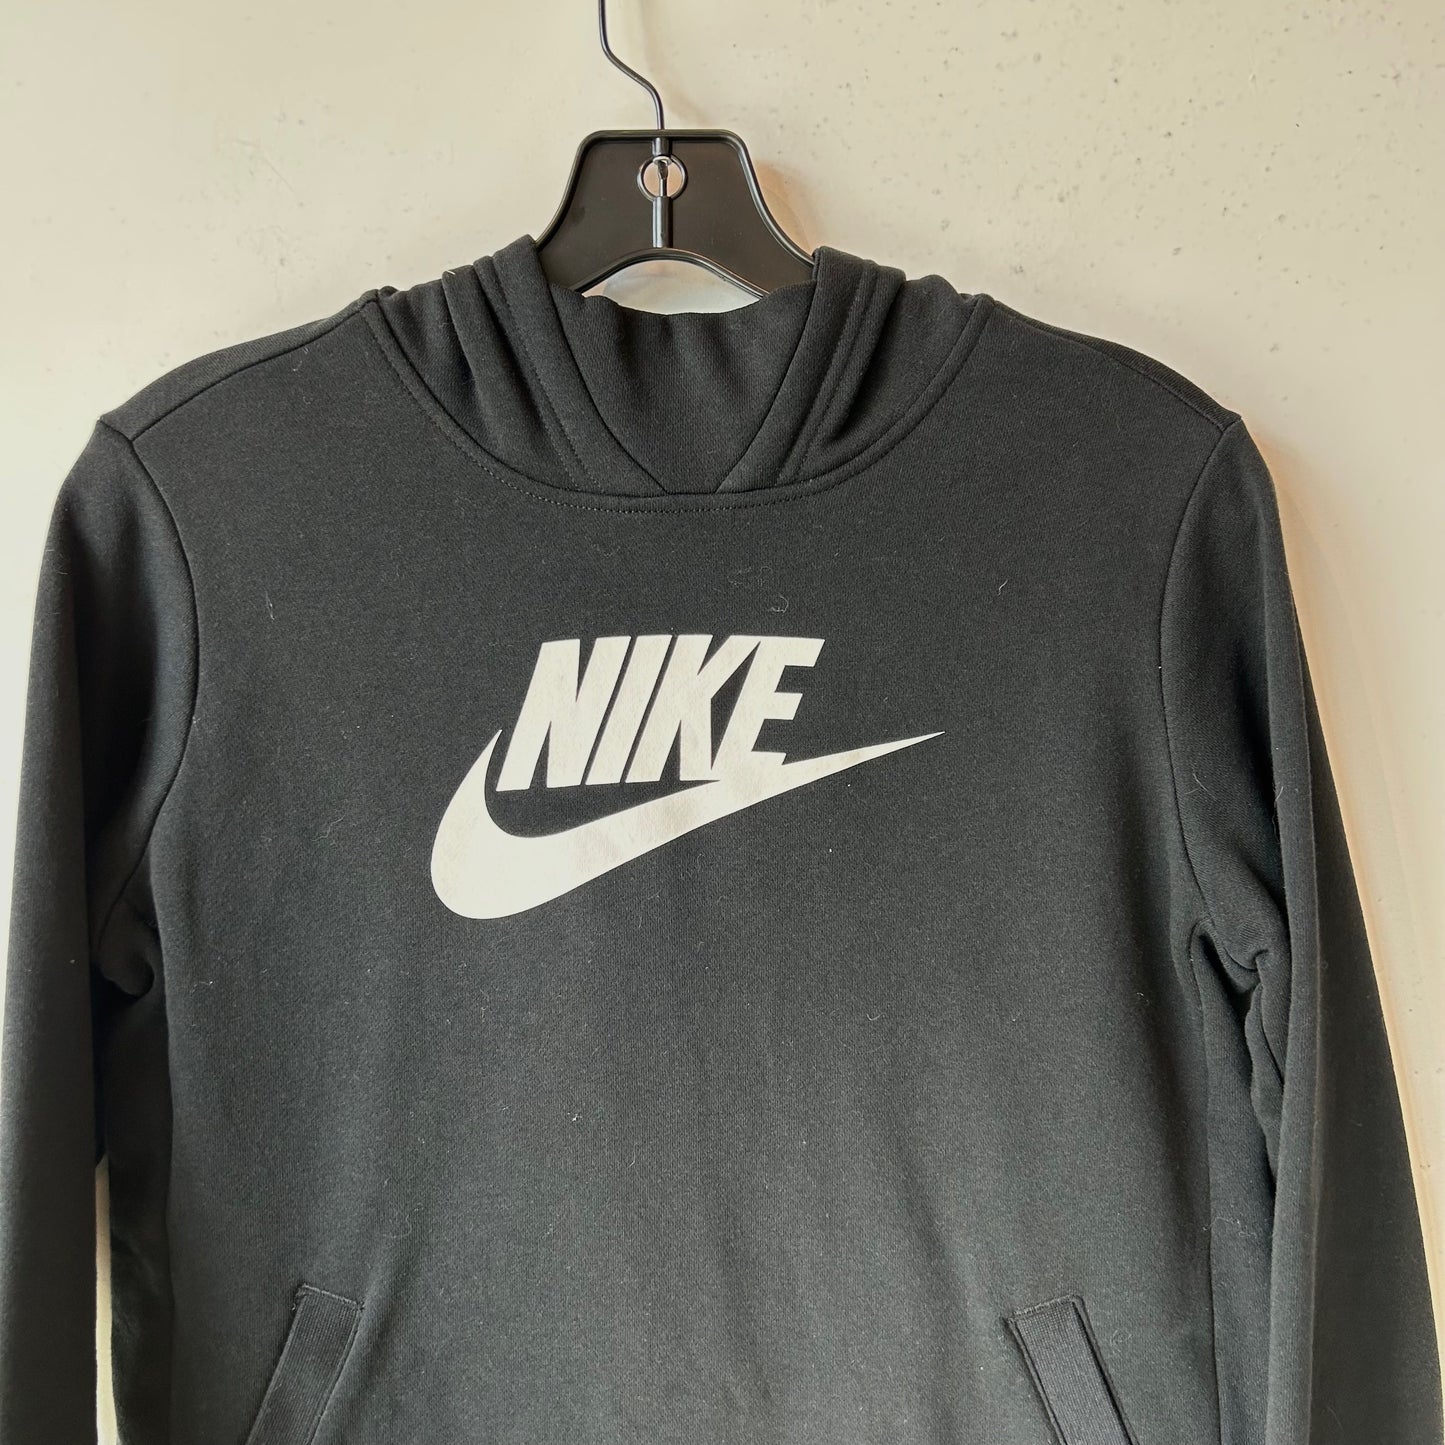 XL Nike Black Sweater